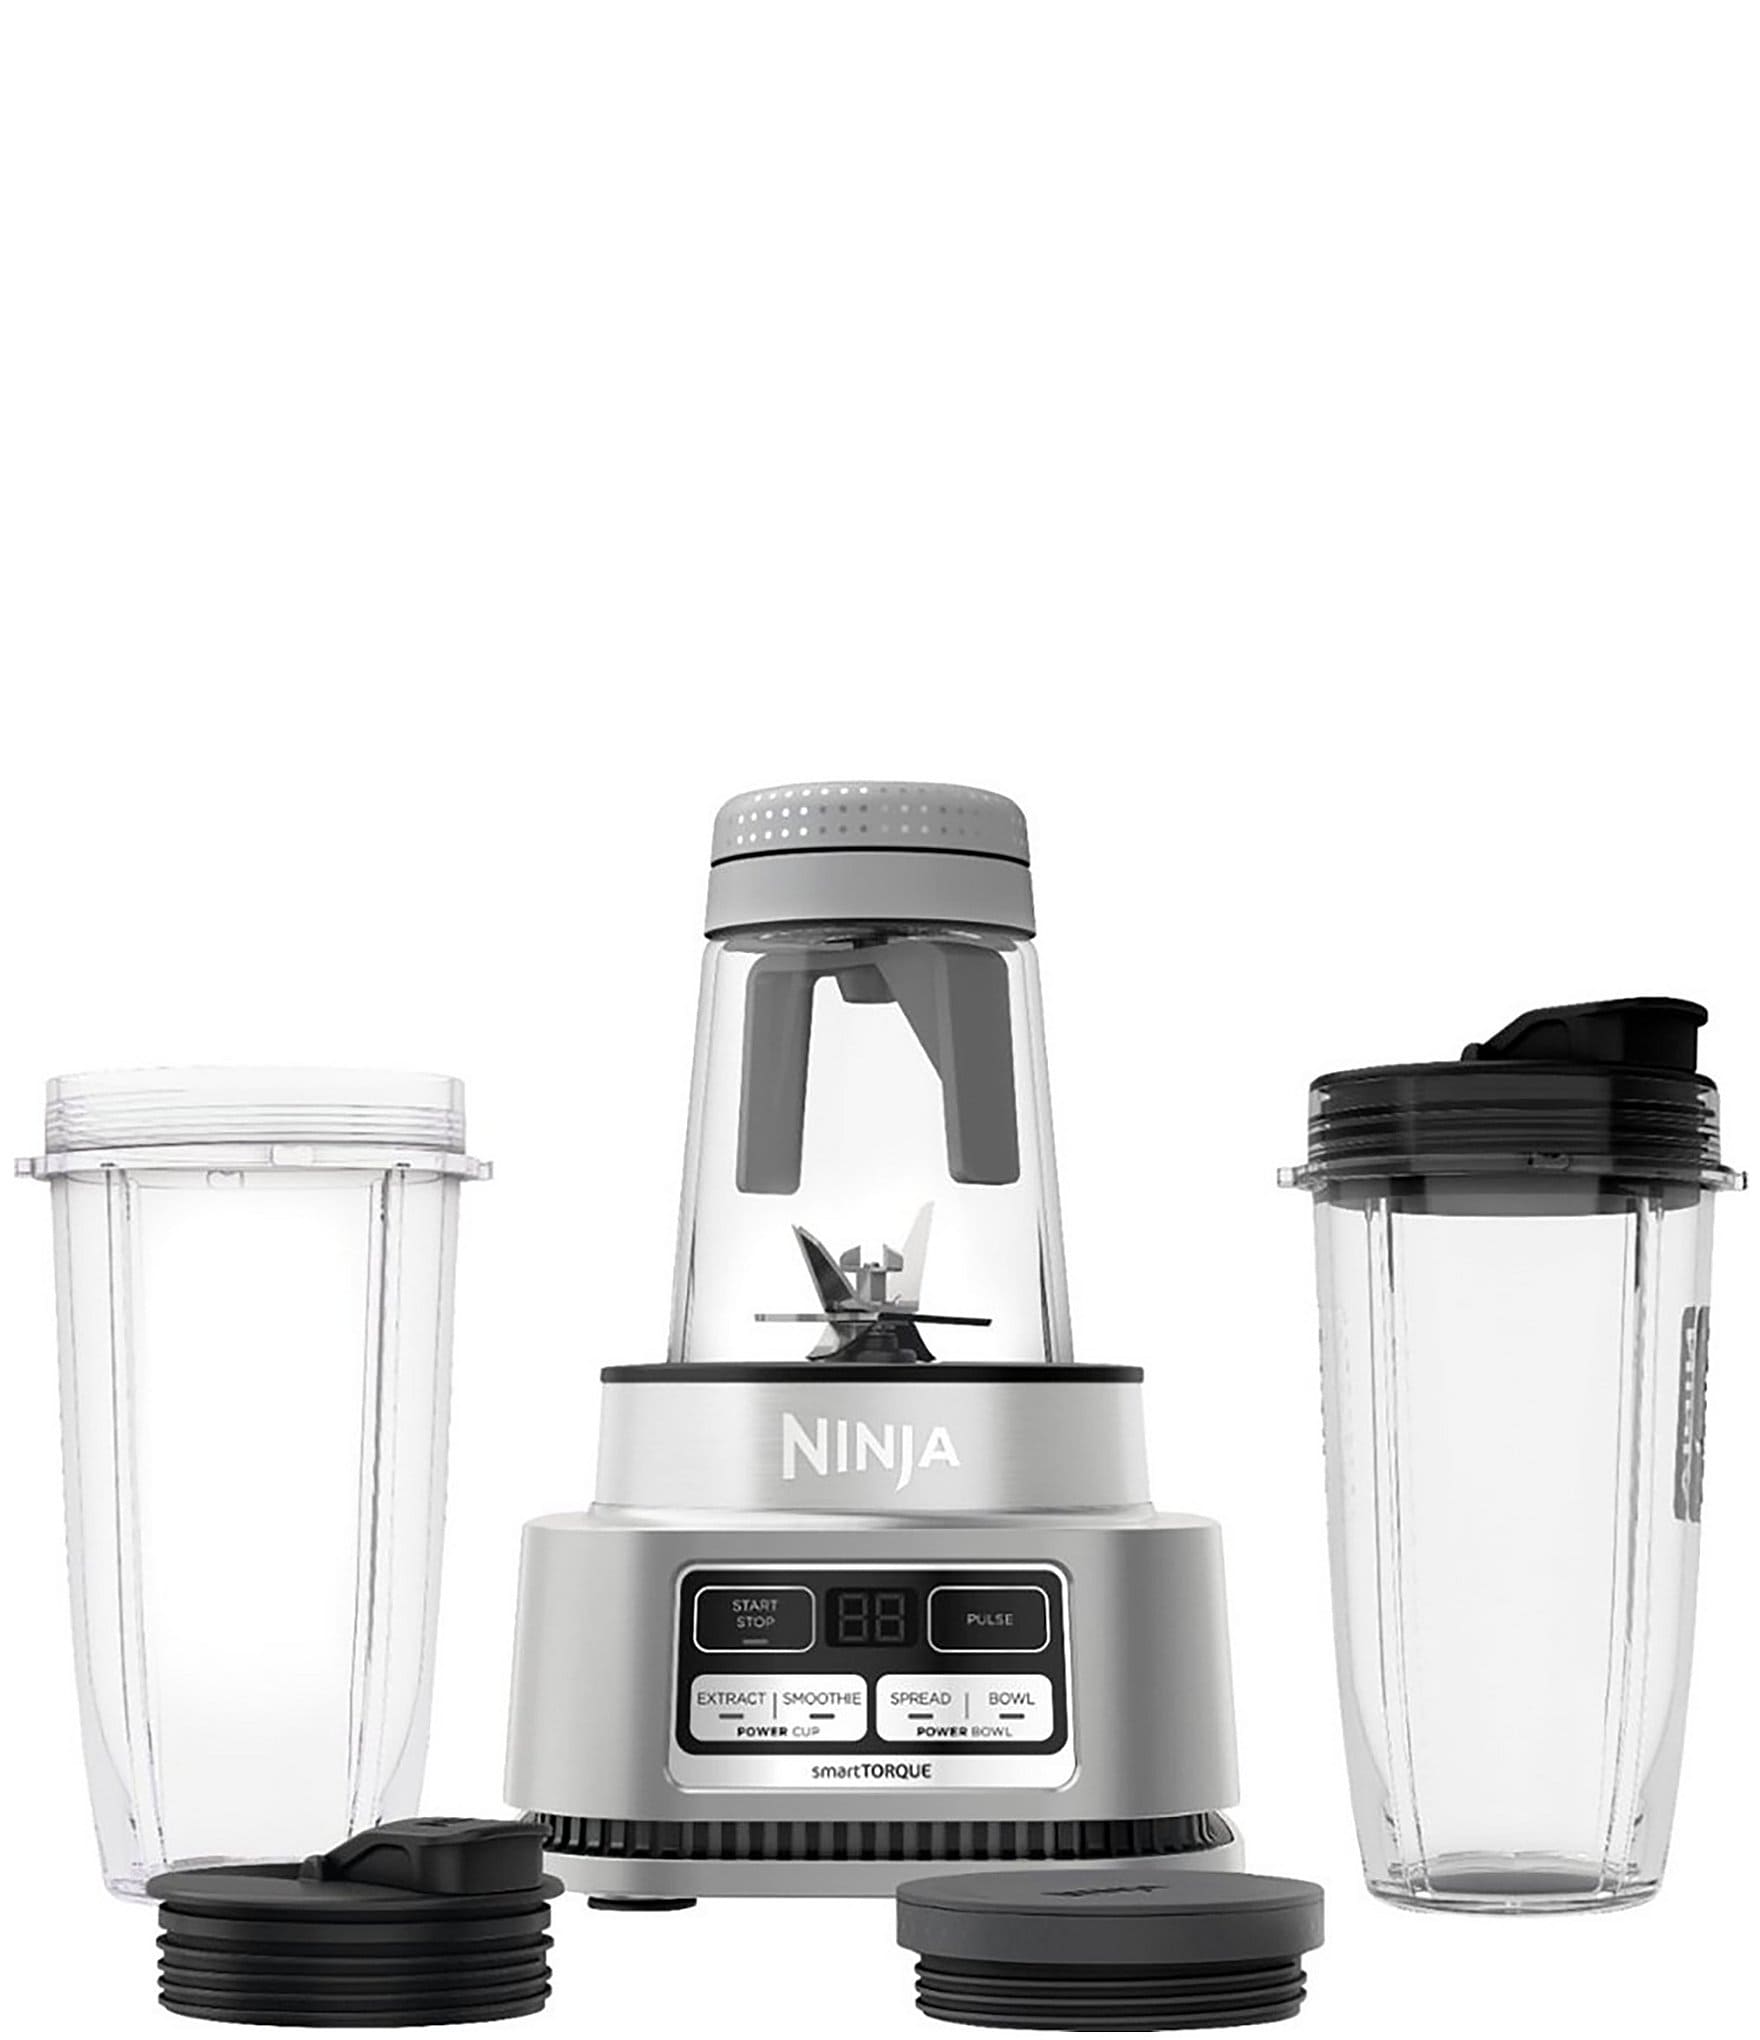 Ninja® Foodi® Power Blender & Processor System with Smoothie Bowl